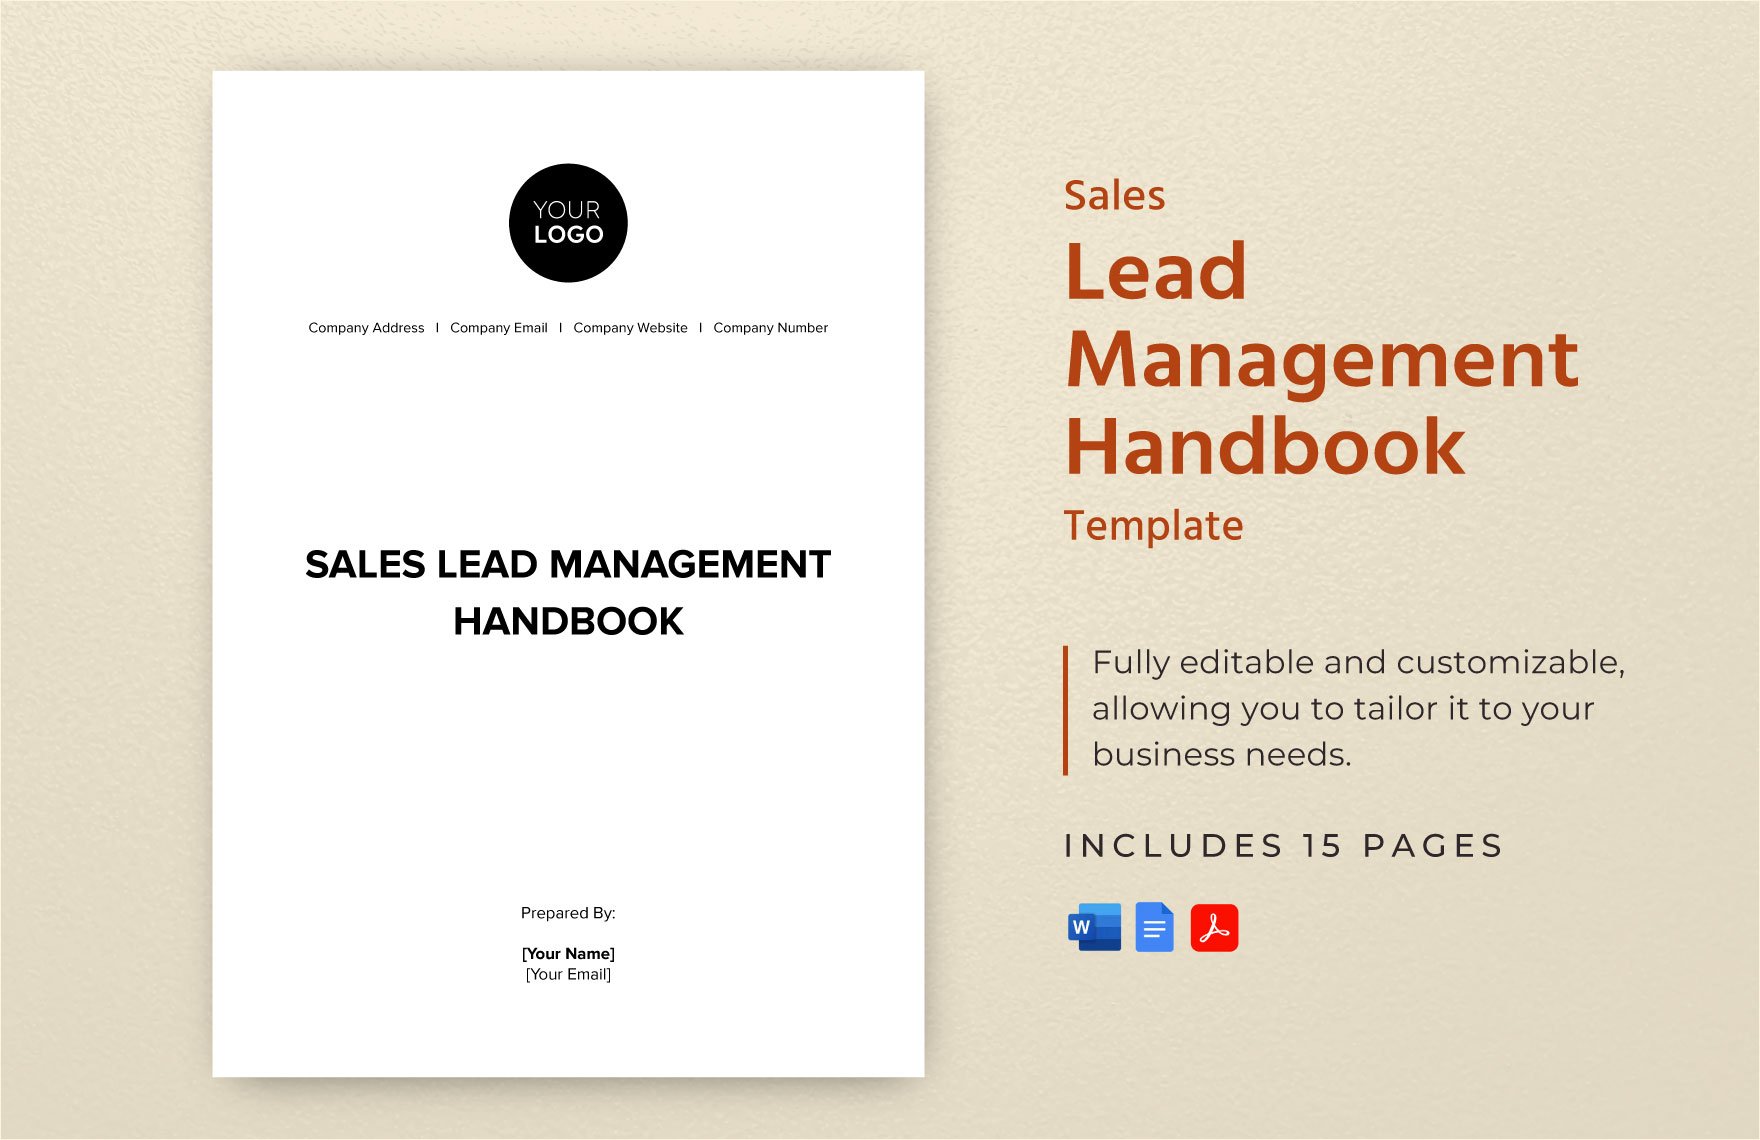 Sales Lead Management Handbook Template in Word, Google Docs, PDF